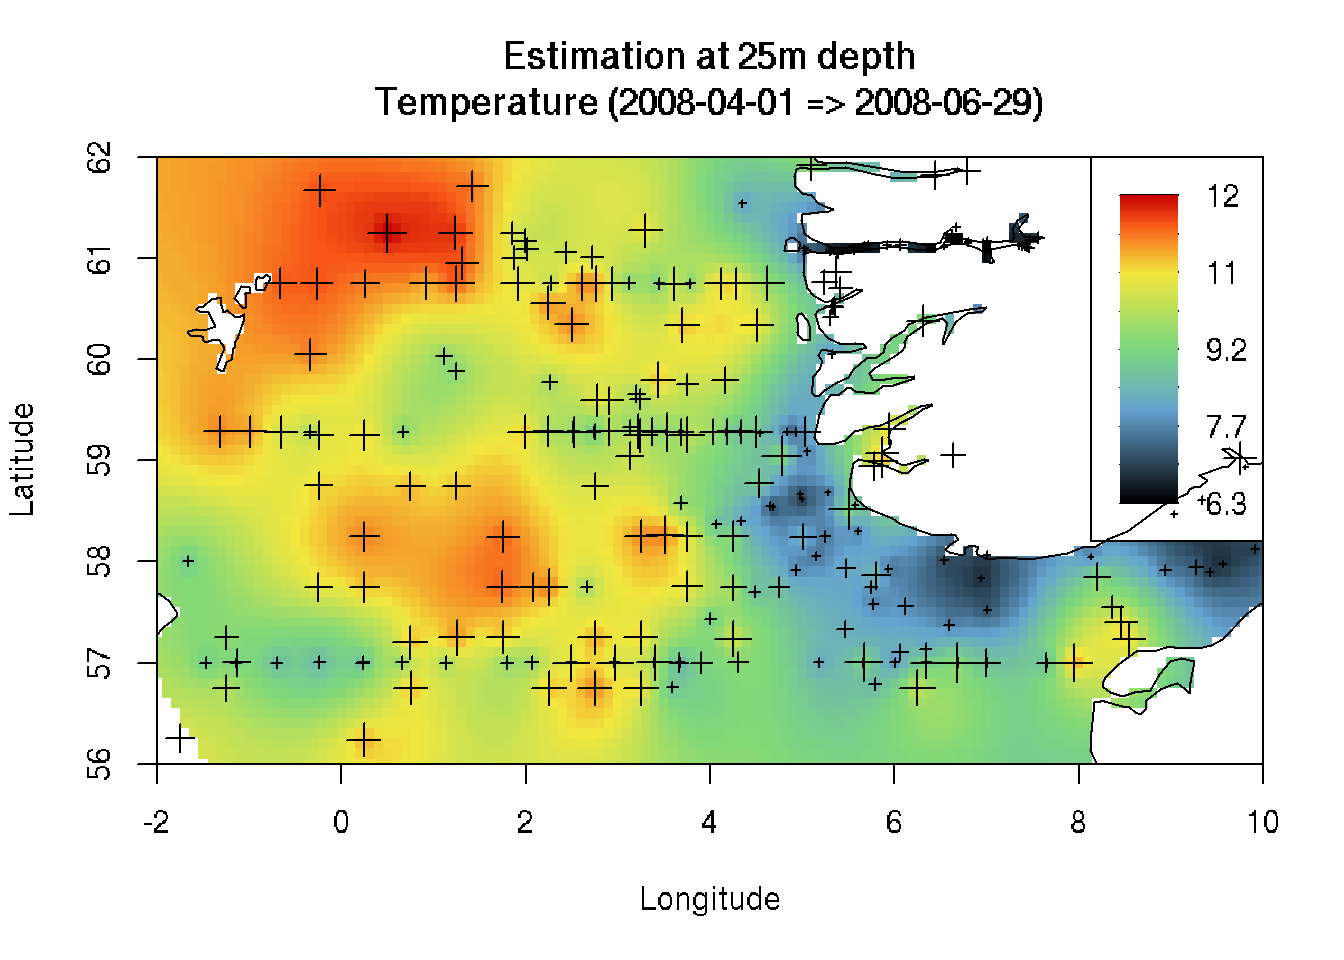 Estimated temperature off the coast of Norway in spring 2008 at 25m depth 